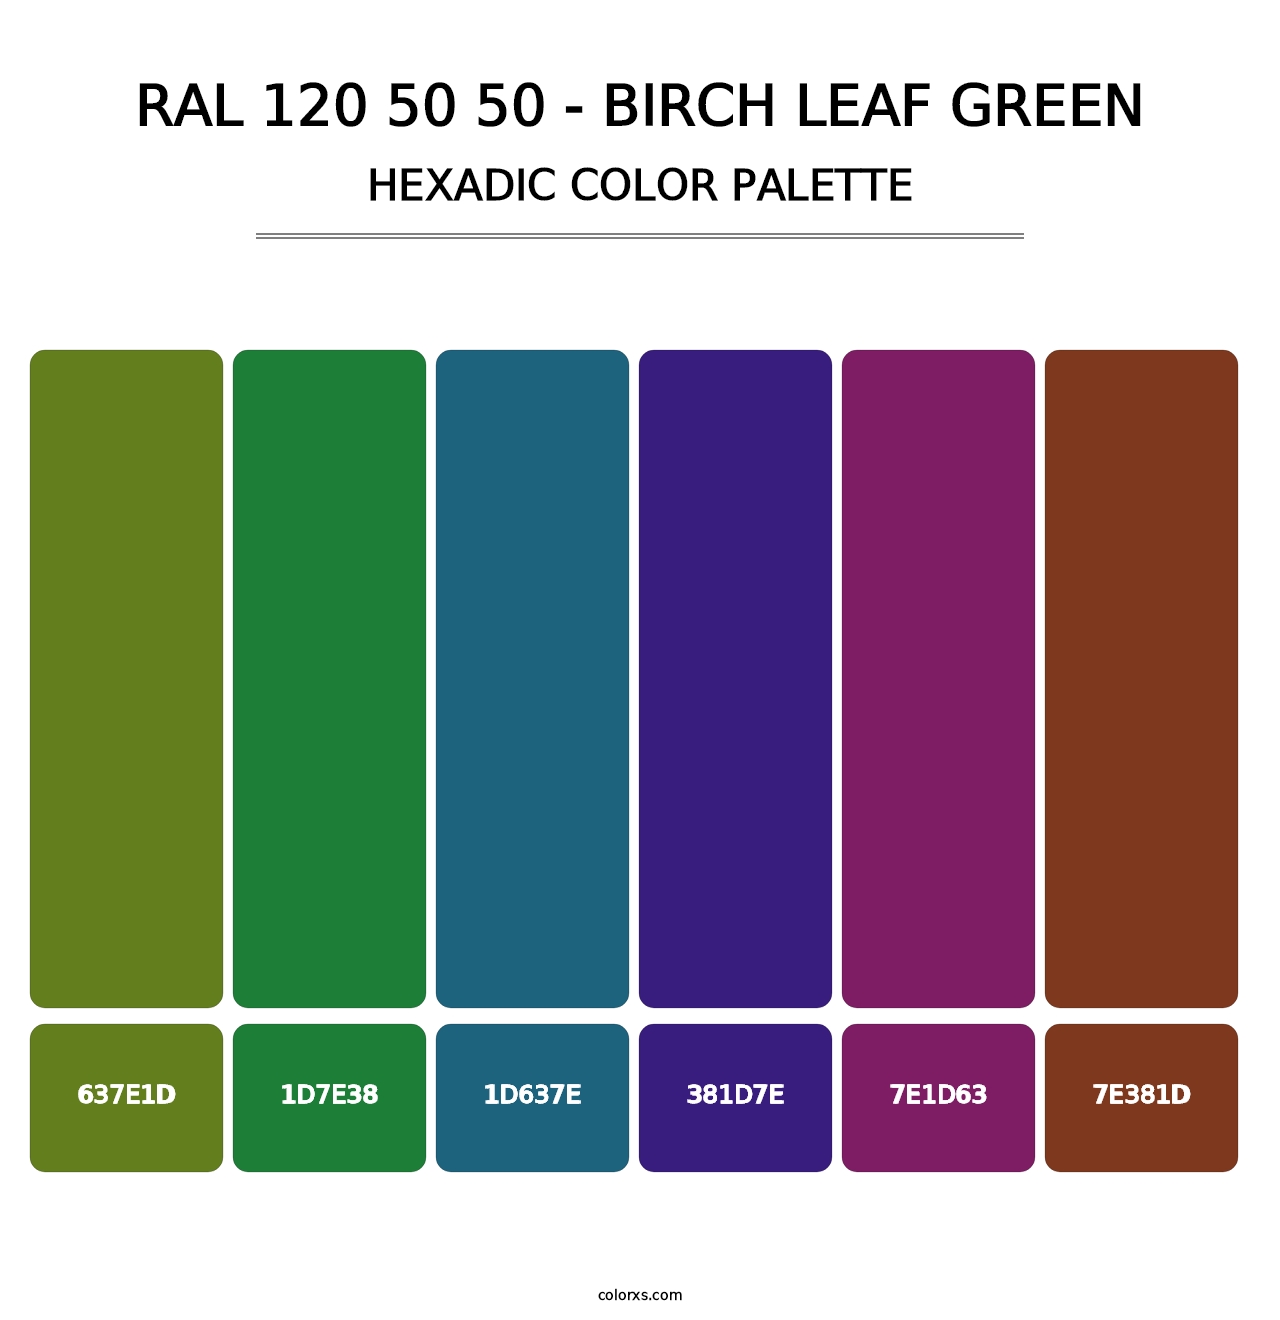 RAL 120 50 50 - Birch Leaf Green - Hexadic Color Palette